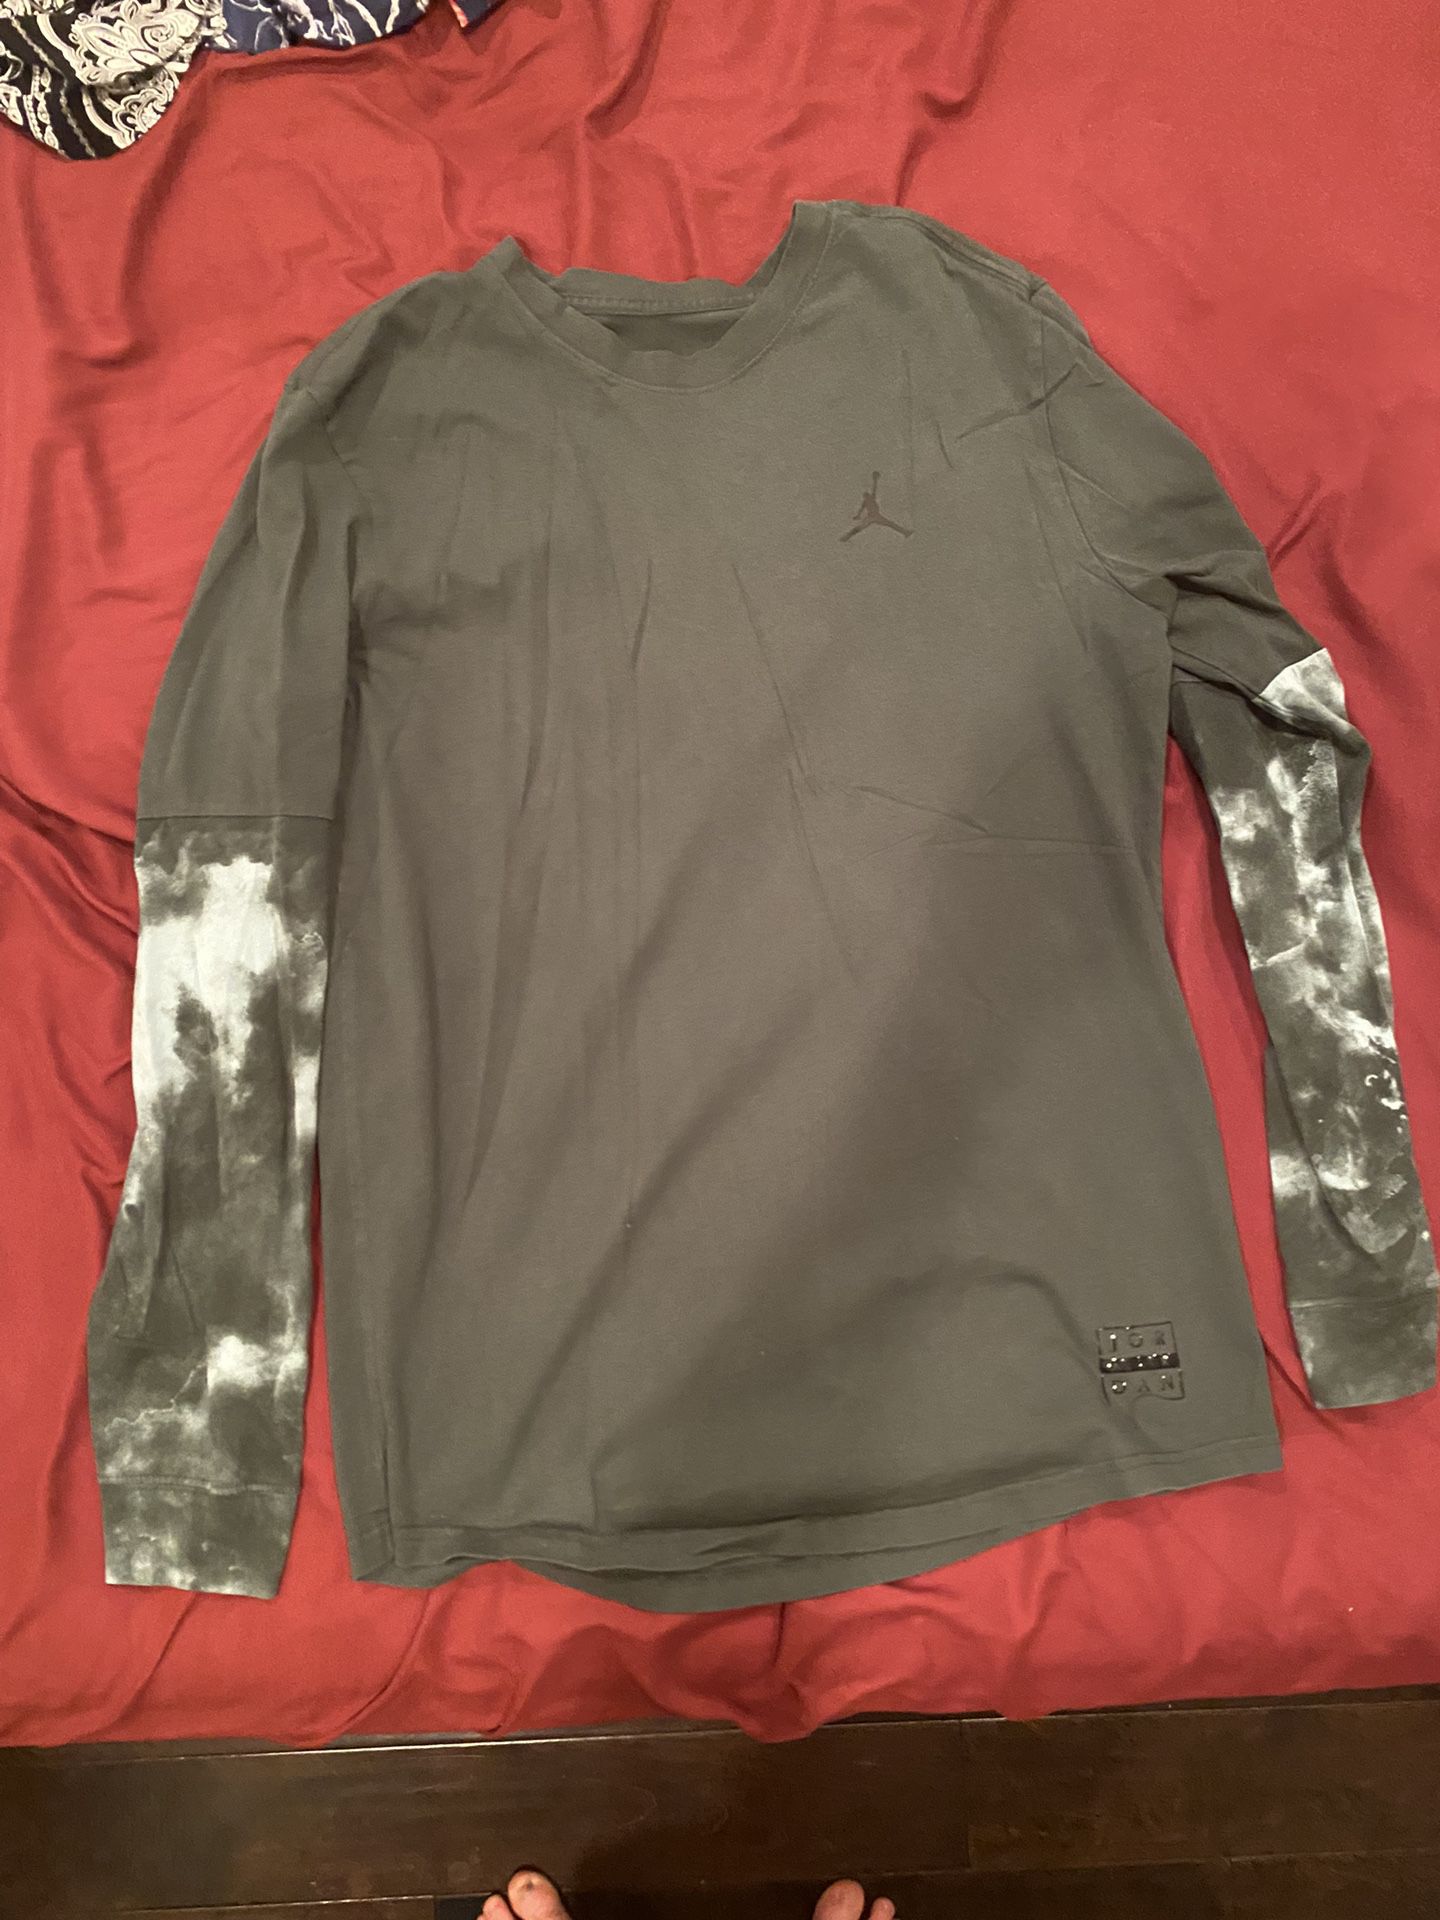 Jordan Shirt Used Large